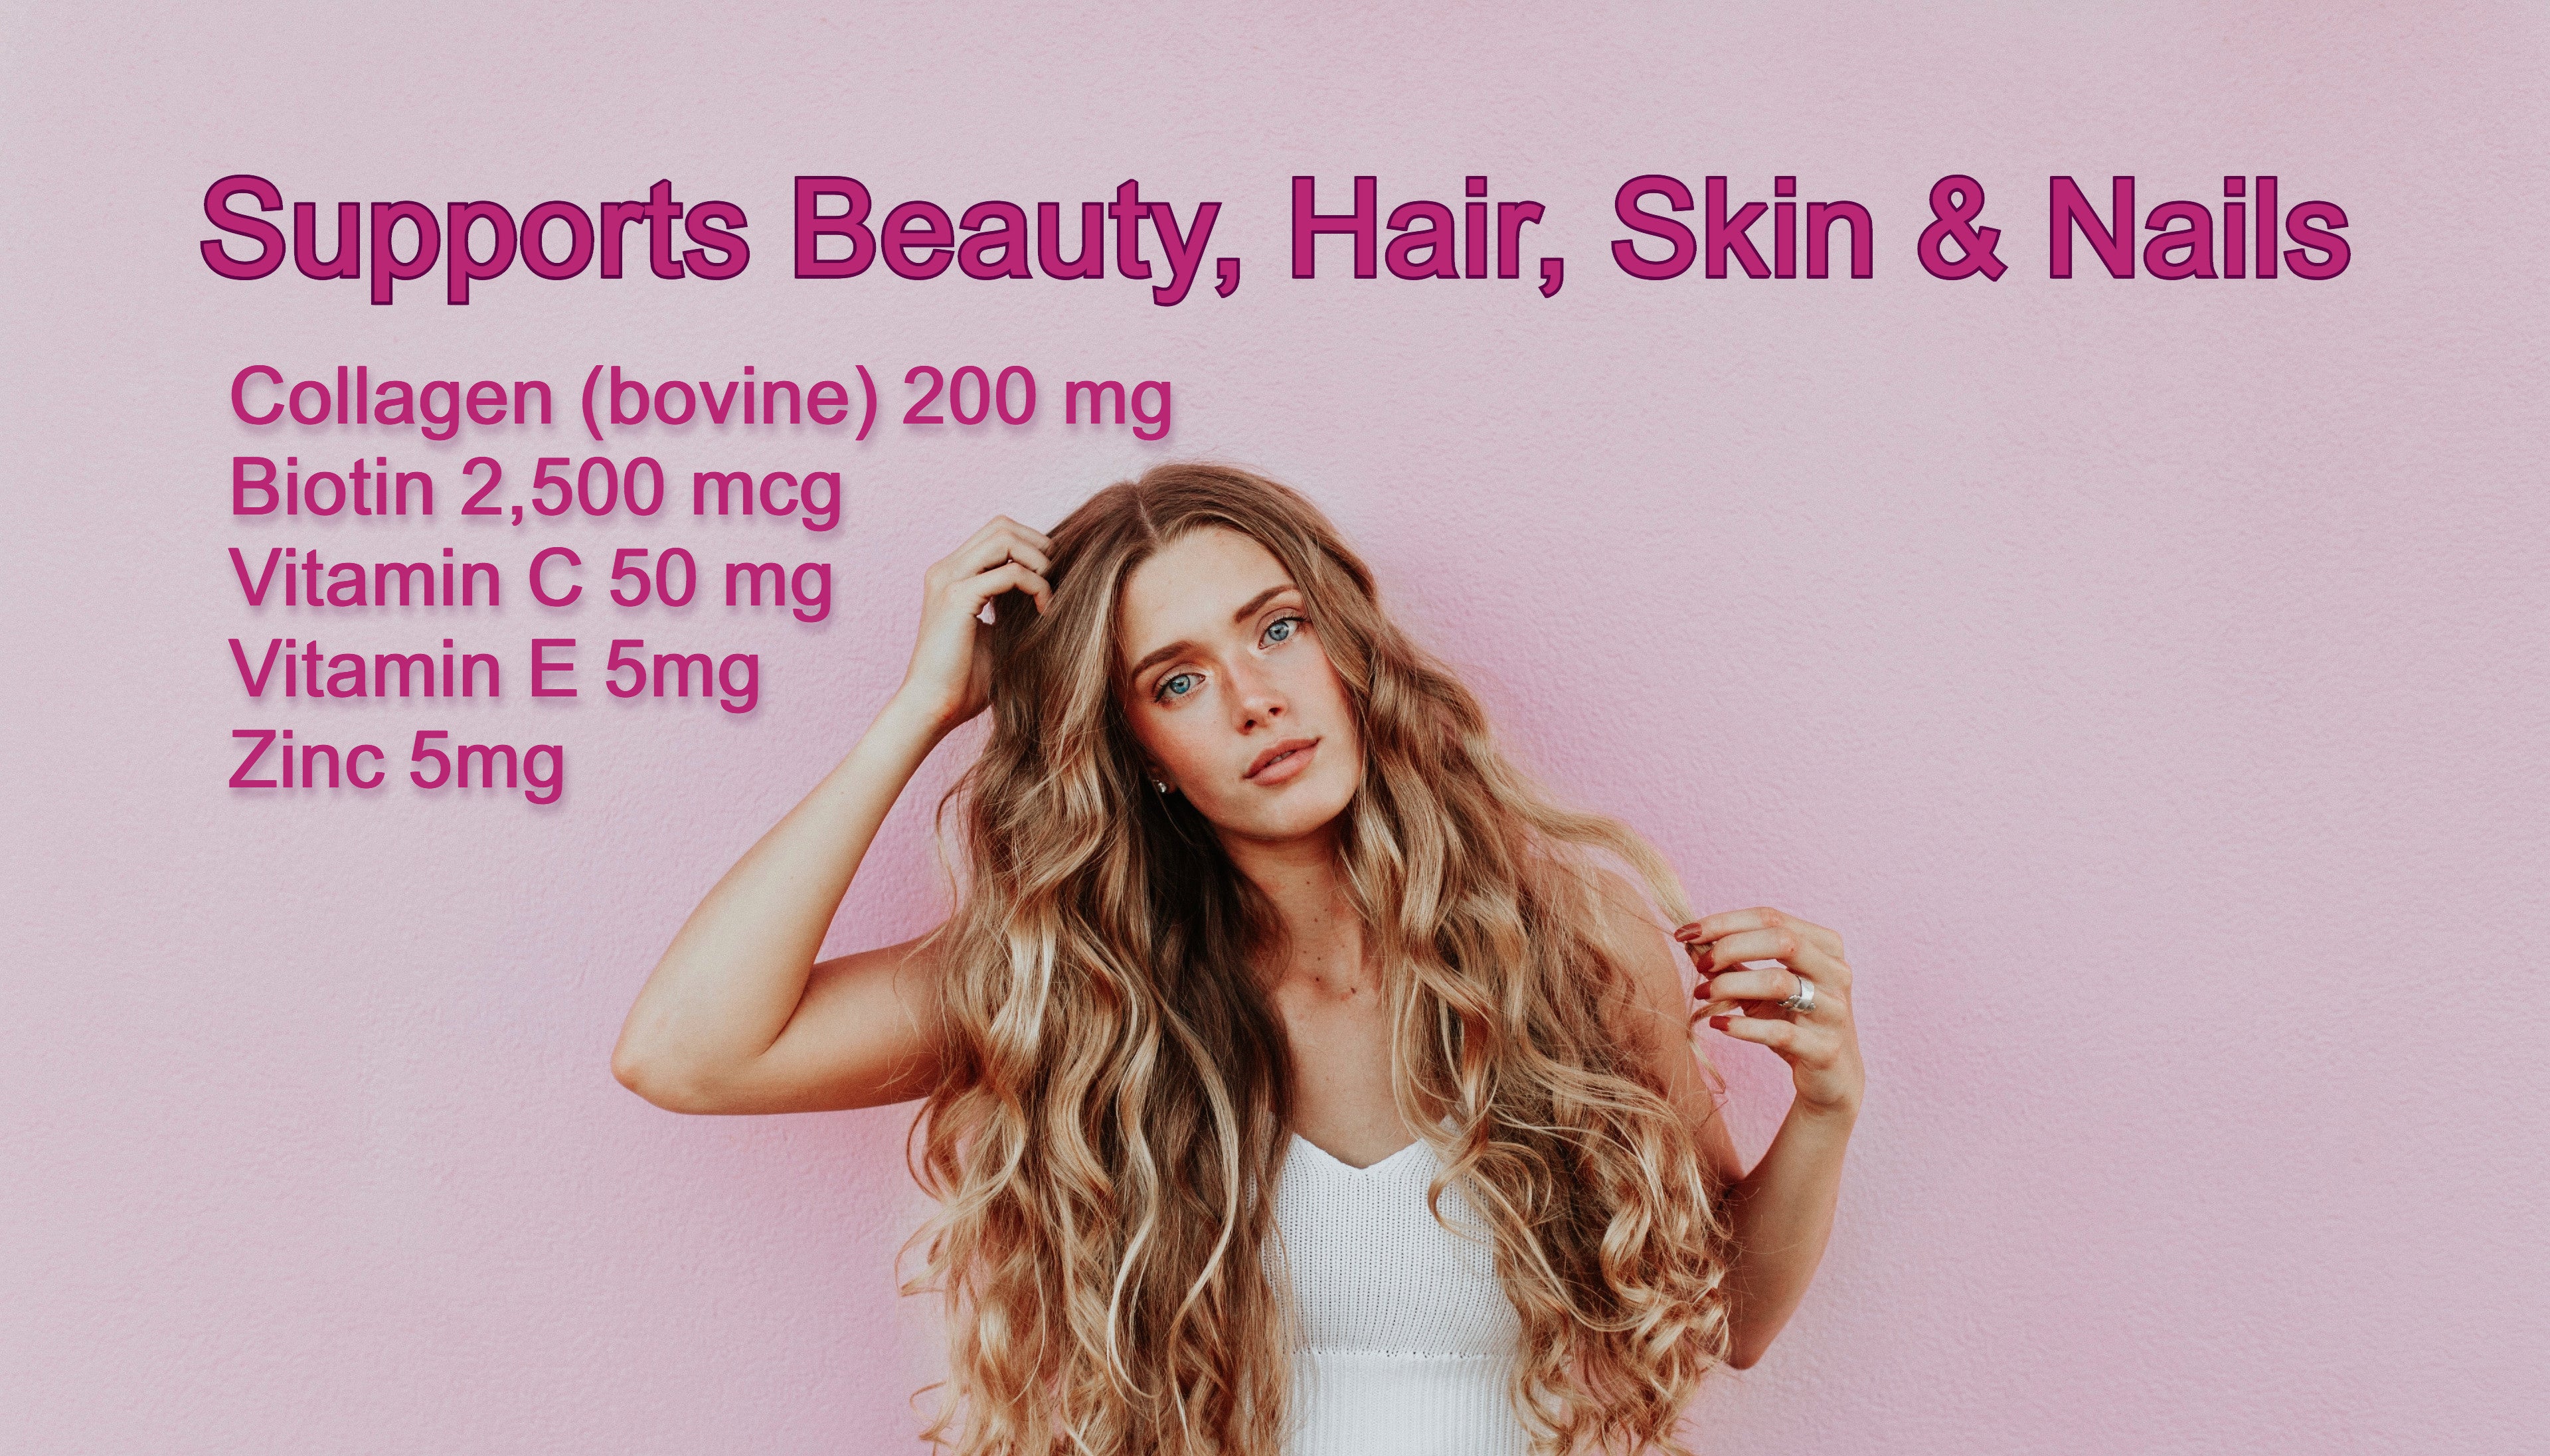 Hair, Skin & Nails with Biotin & Collagen Gelatin-free Halal Certified gummies 